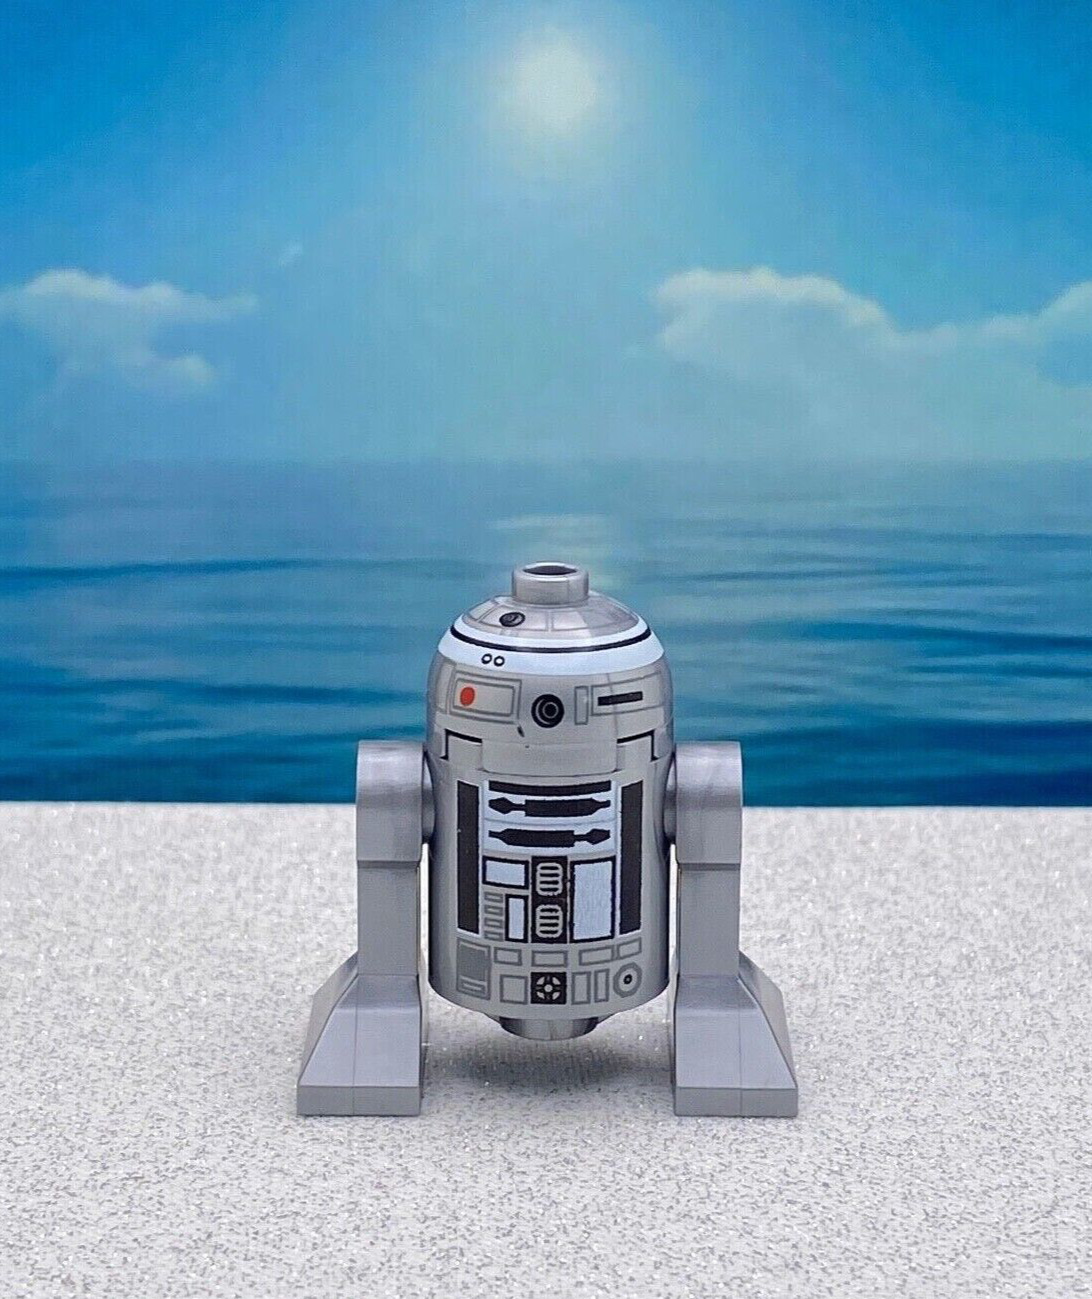 LEGO Star Wars Astromech Droid R2-Q2 Minifigure 7915